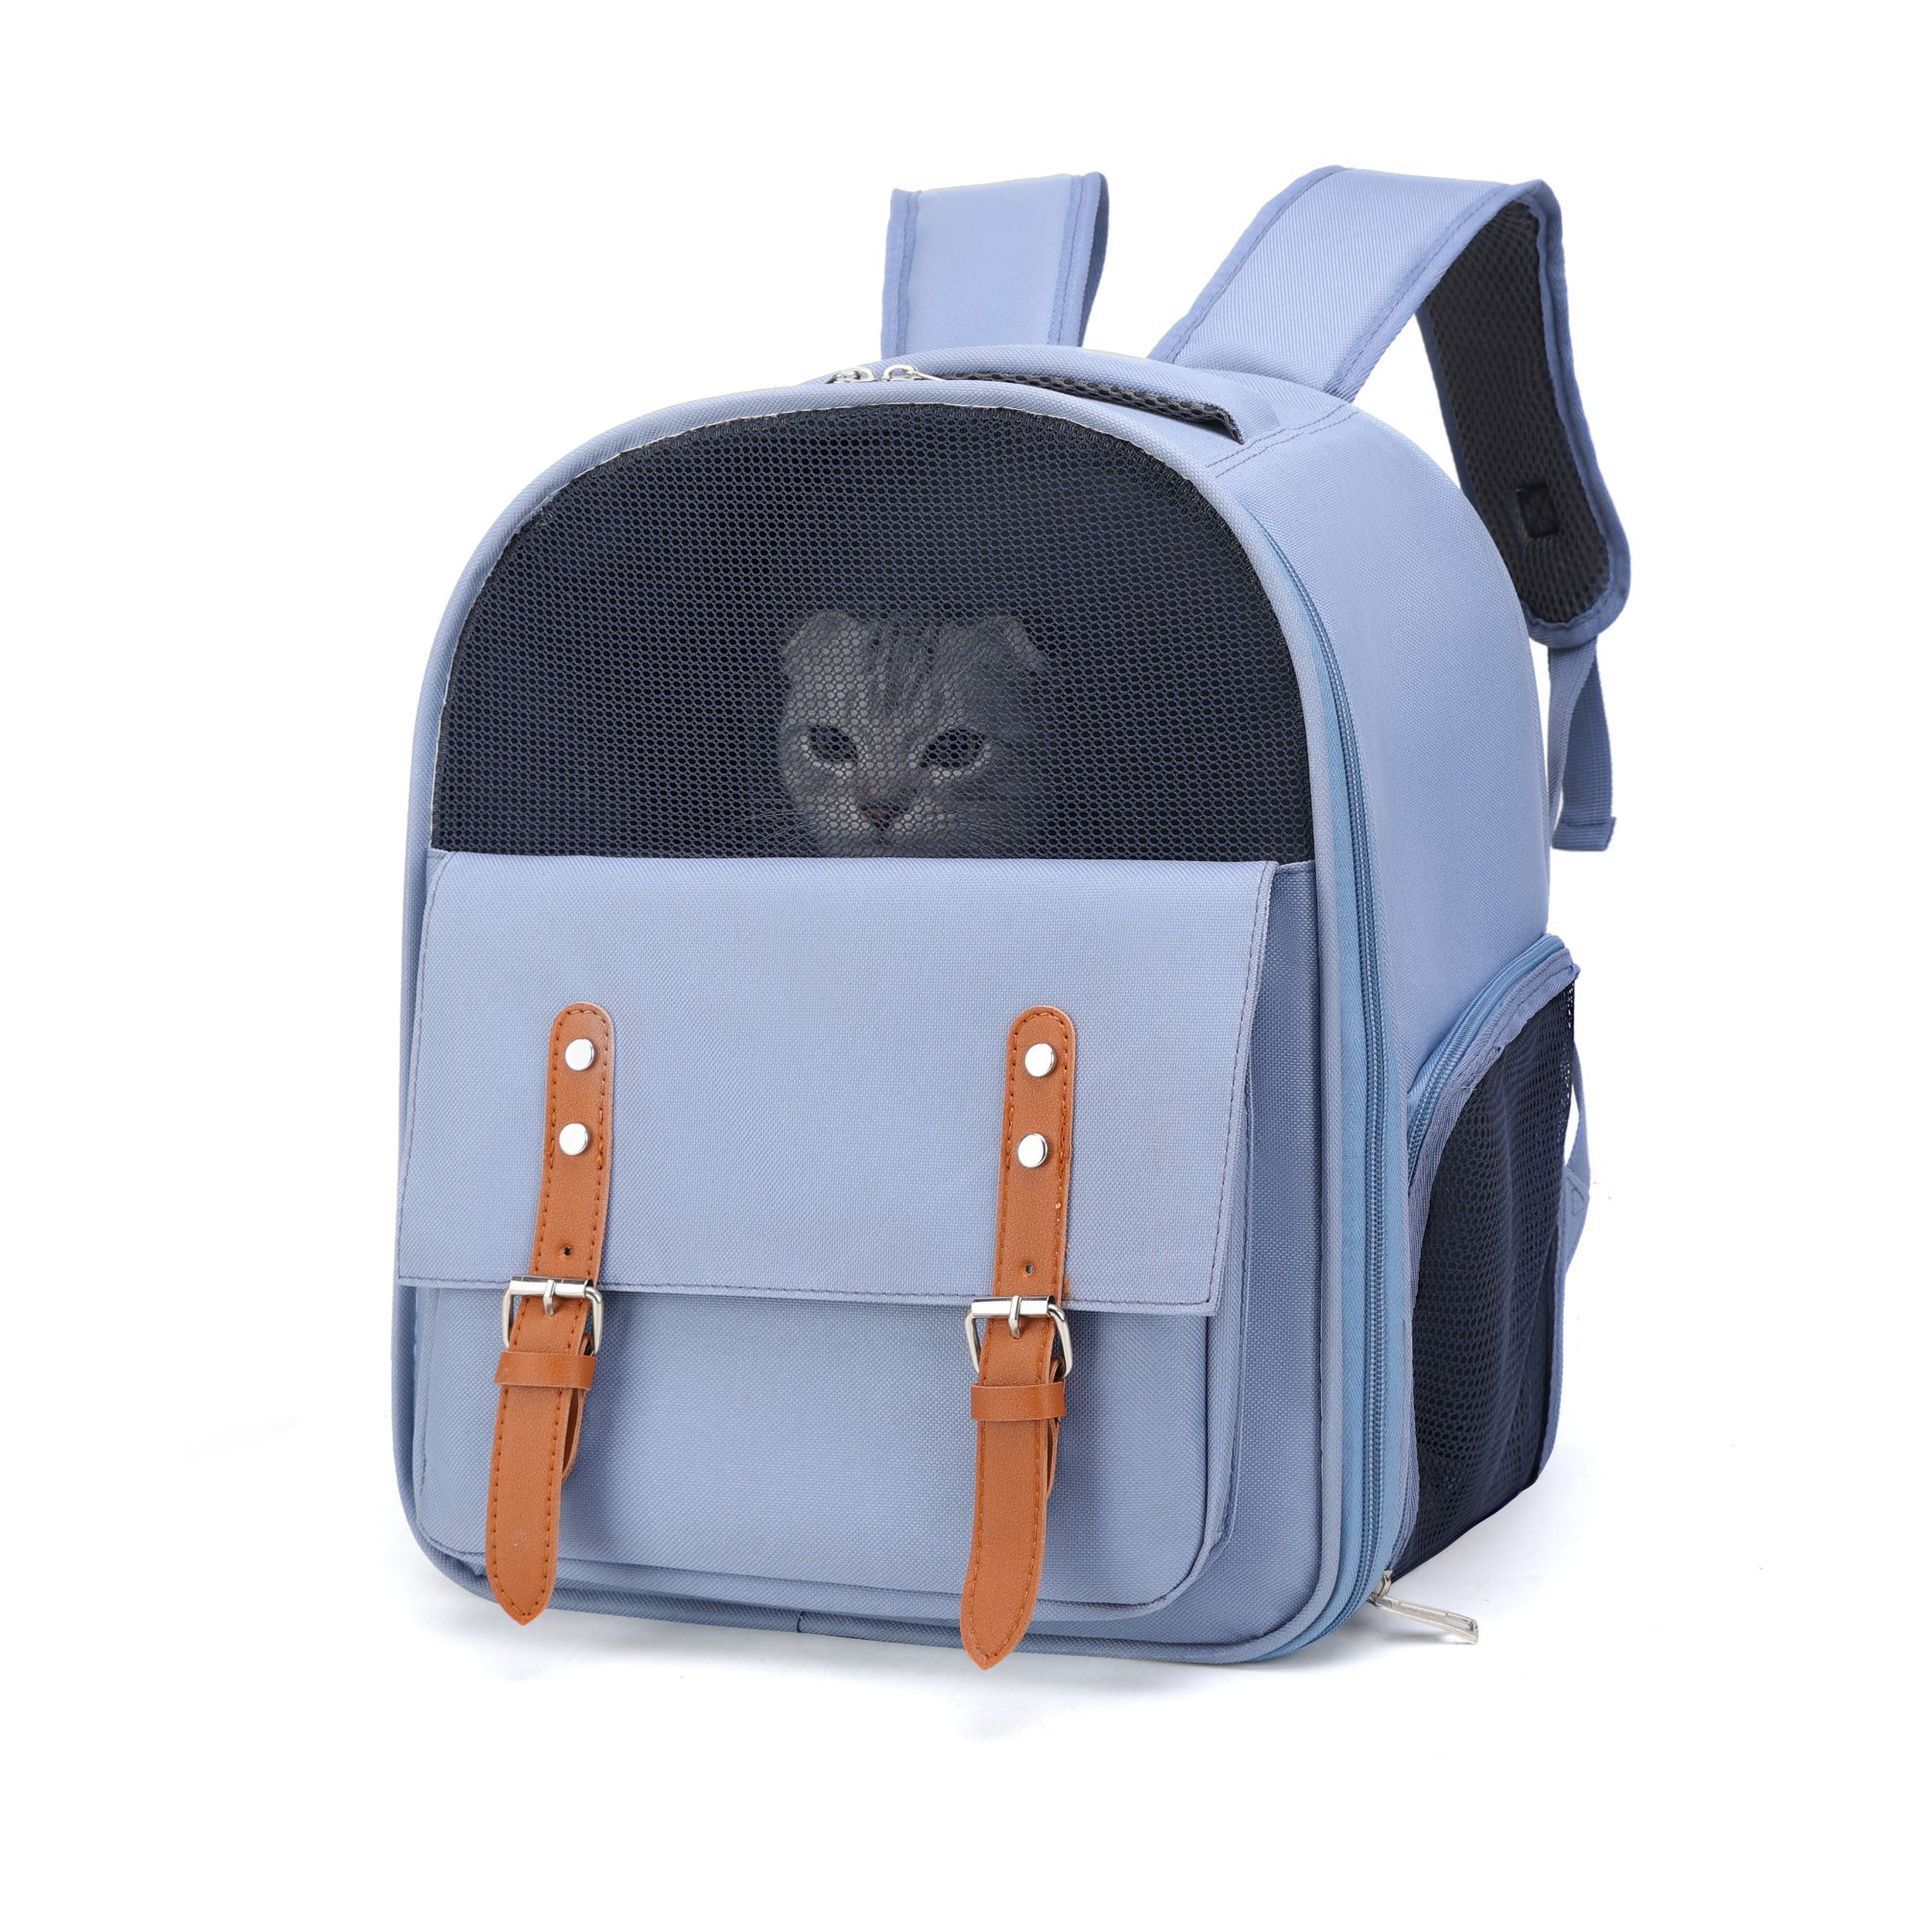 Pet Supplies Amazon New Cat Diaper Bag Portable Bag Breathable Large Capacity Pet Backpack Cat Backpack